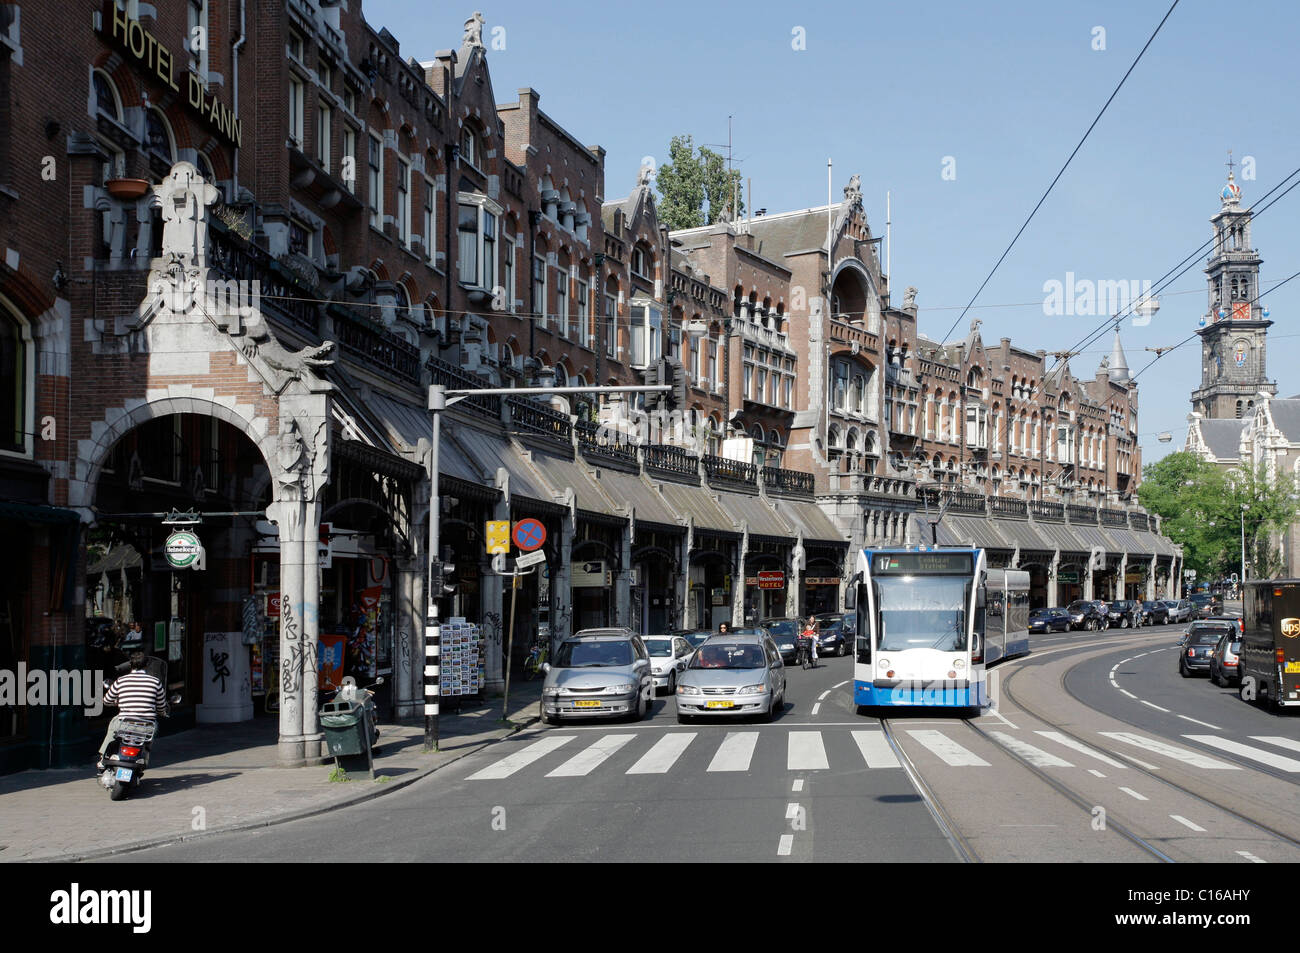 Row of houses, shops, arcades, Raadhuisstraat, Westerkerk Church, Amsterdam, Netherlands, Europe Stock Photo